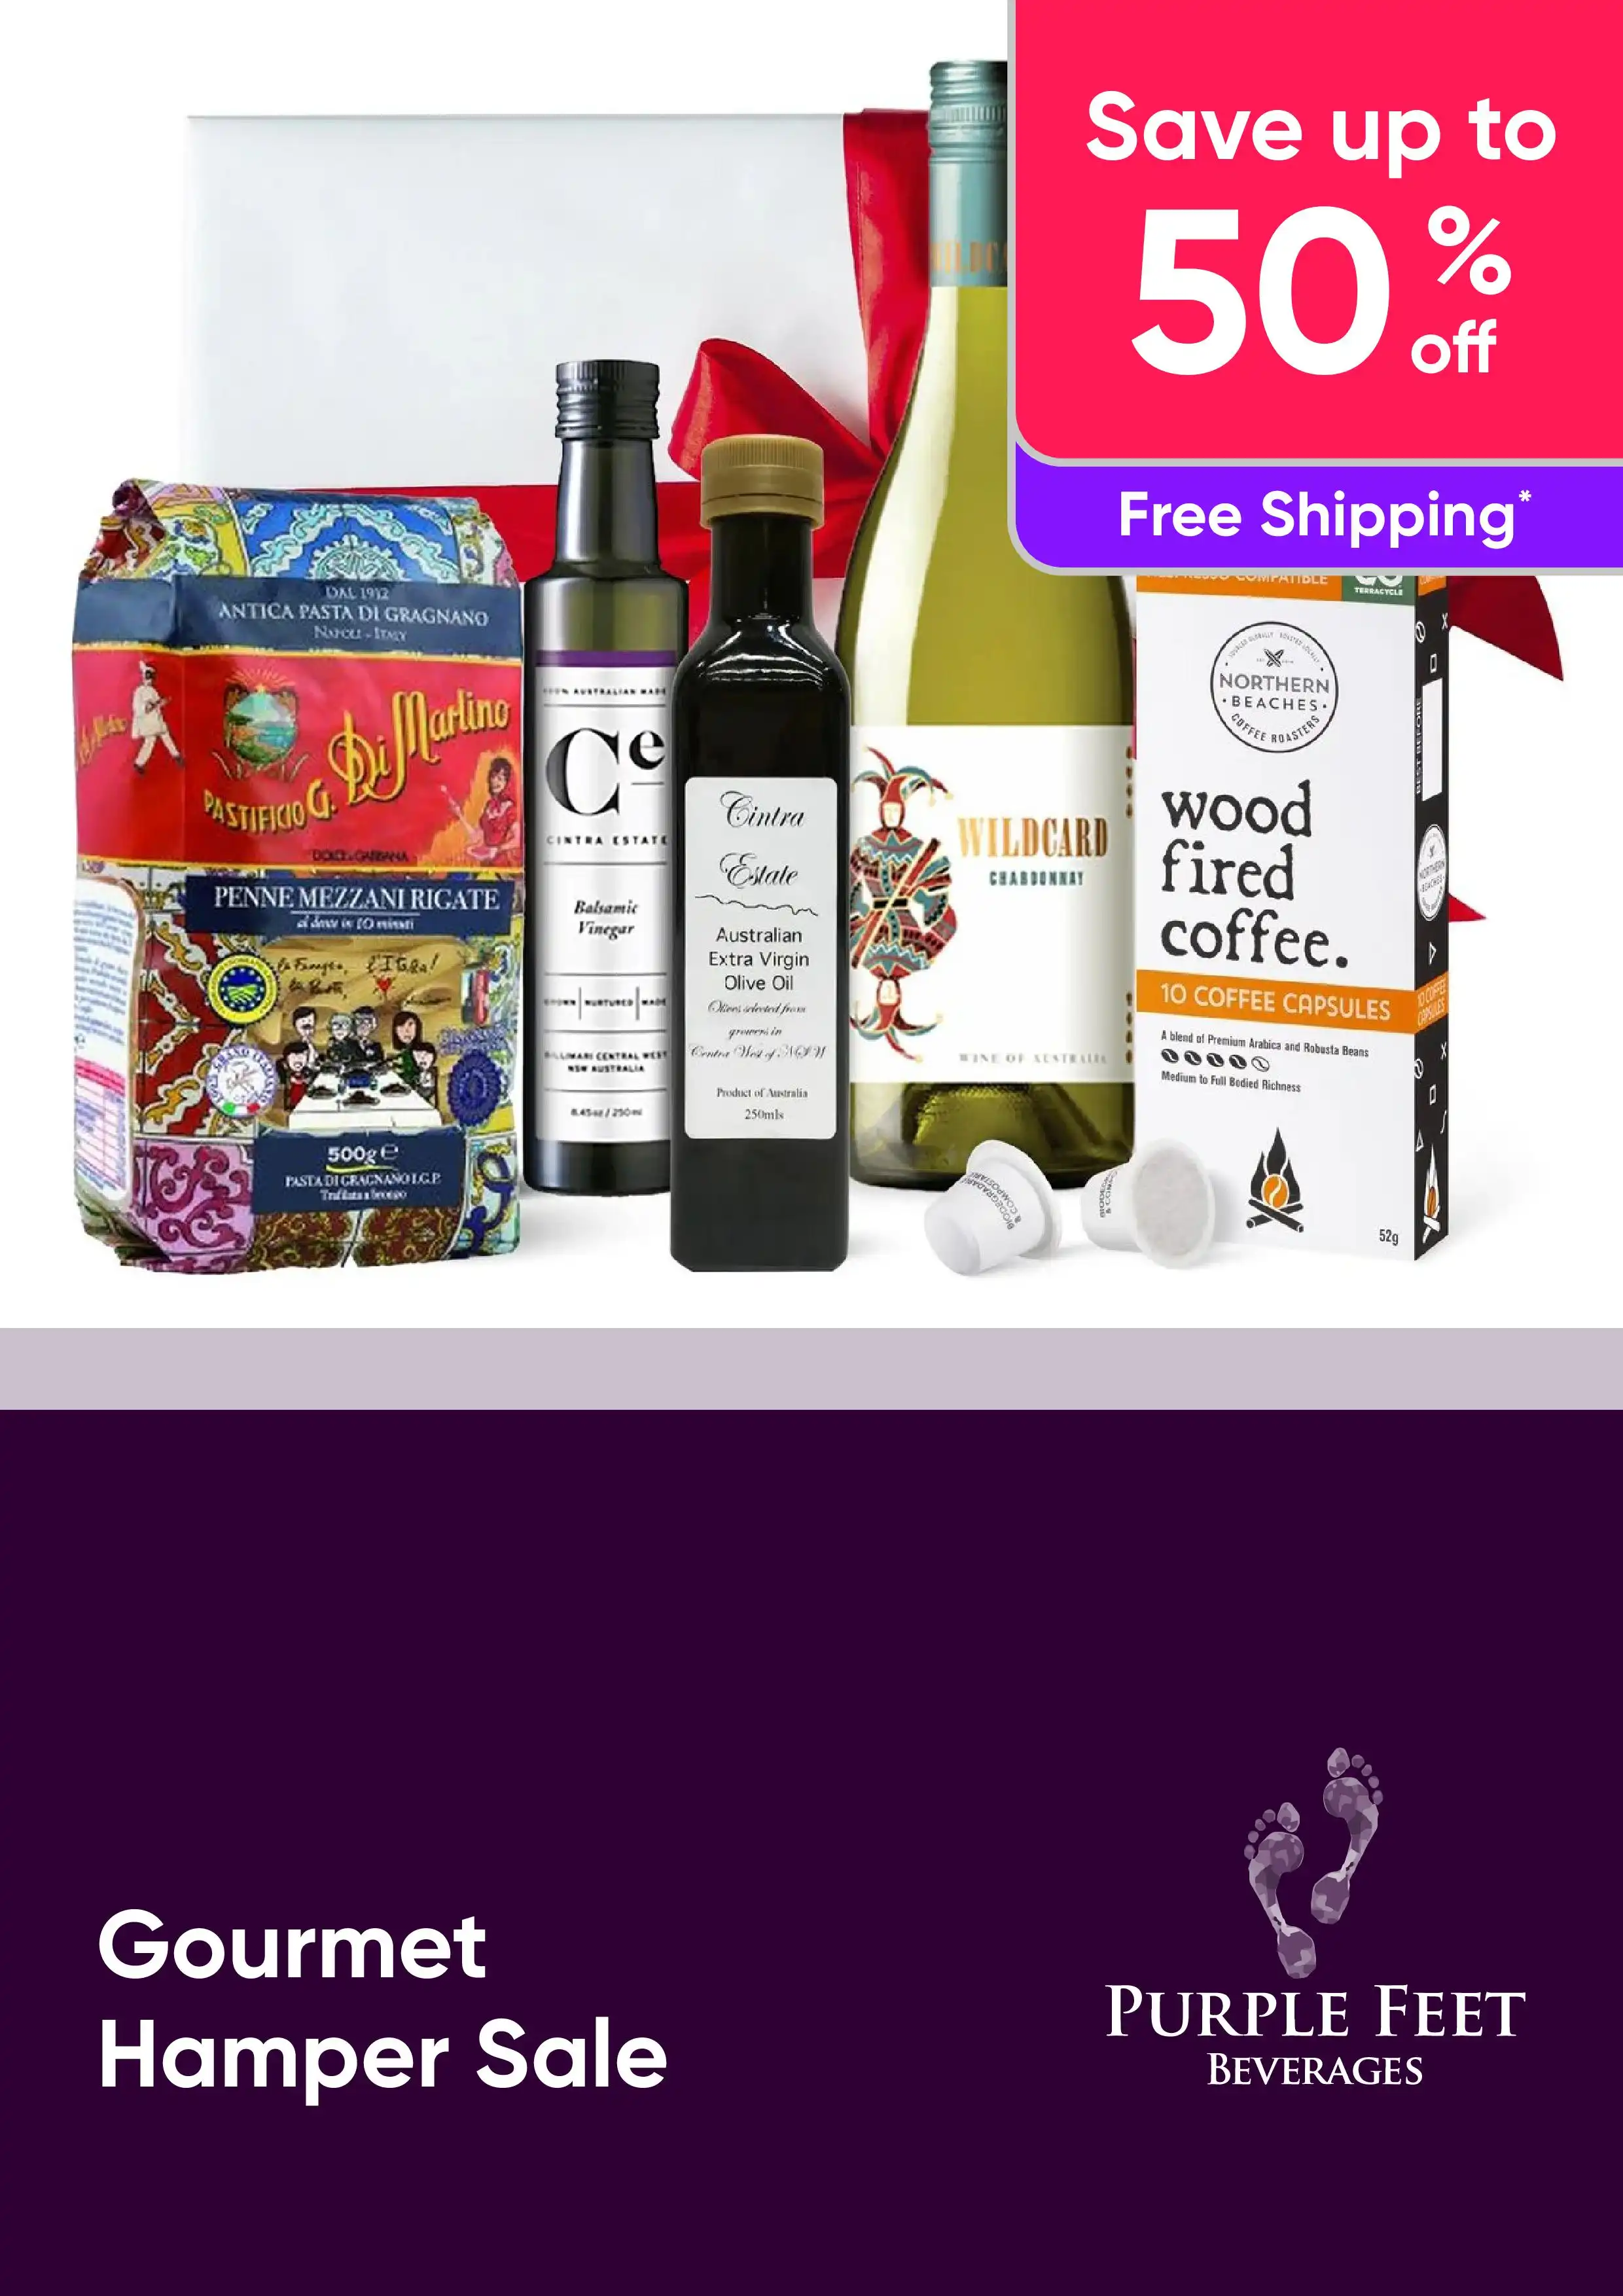 Gourmet Hamper Sale - Save Up to 50%